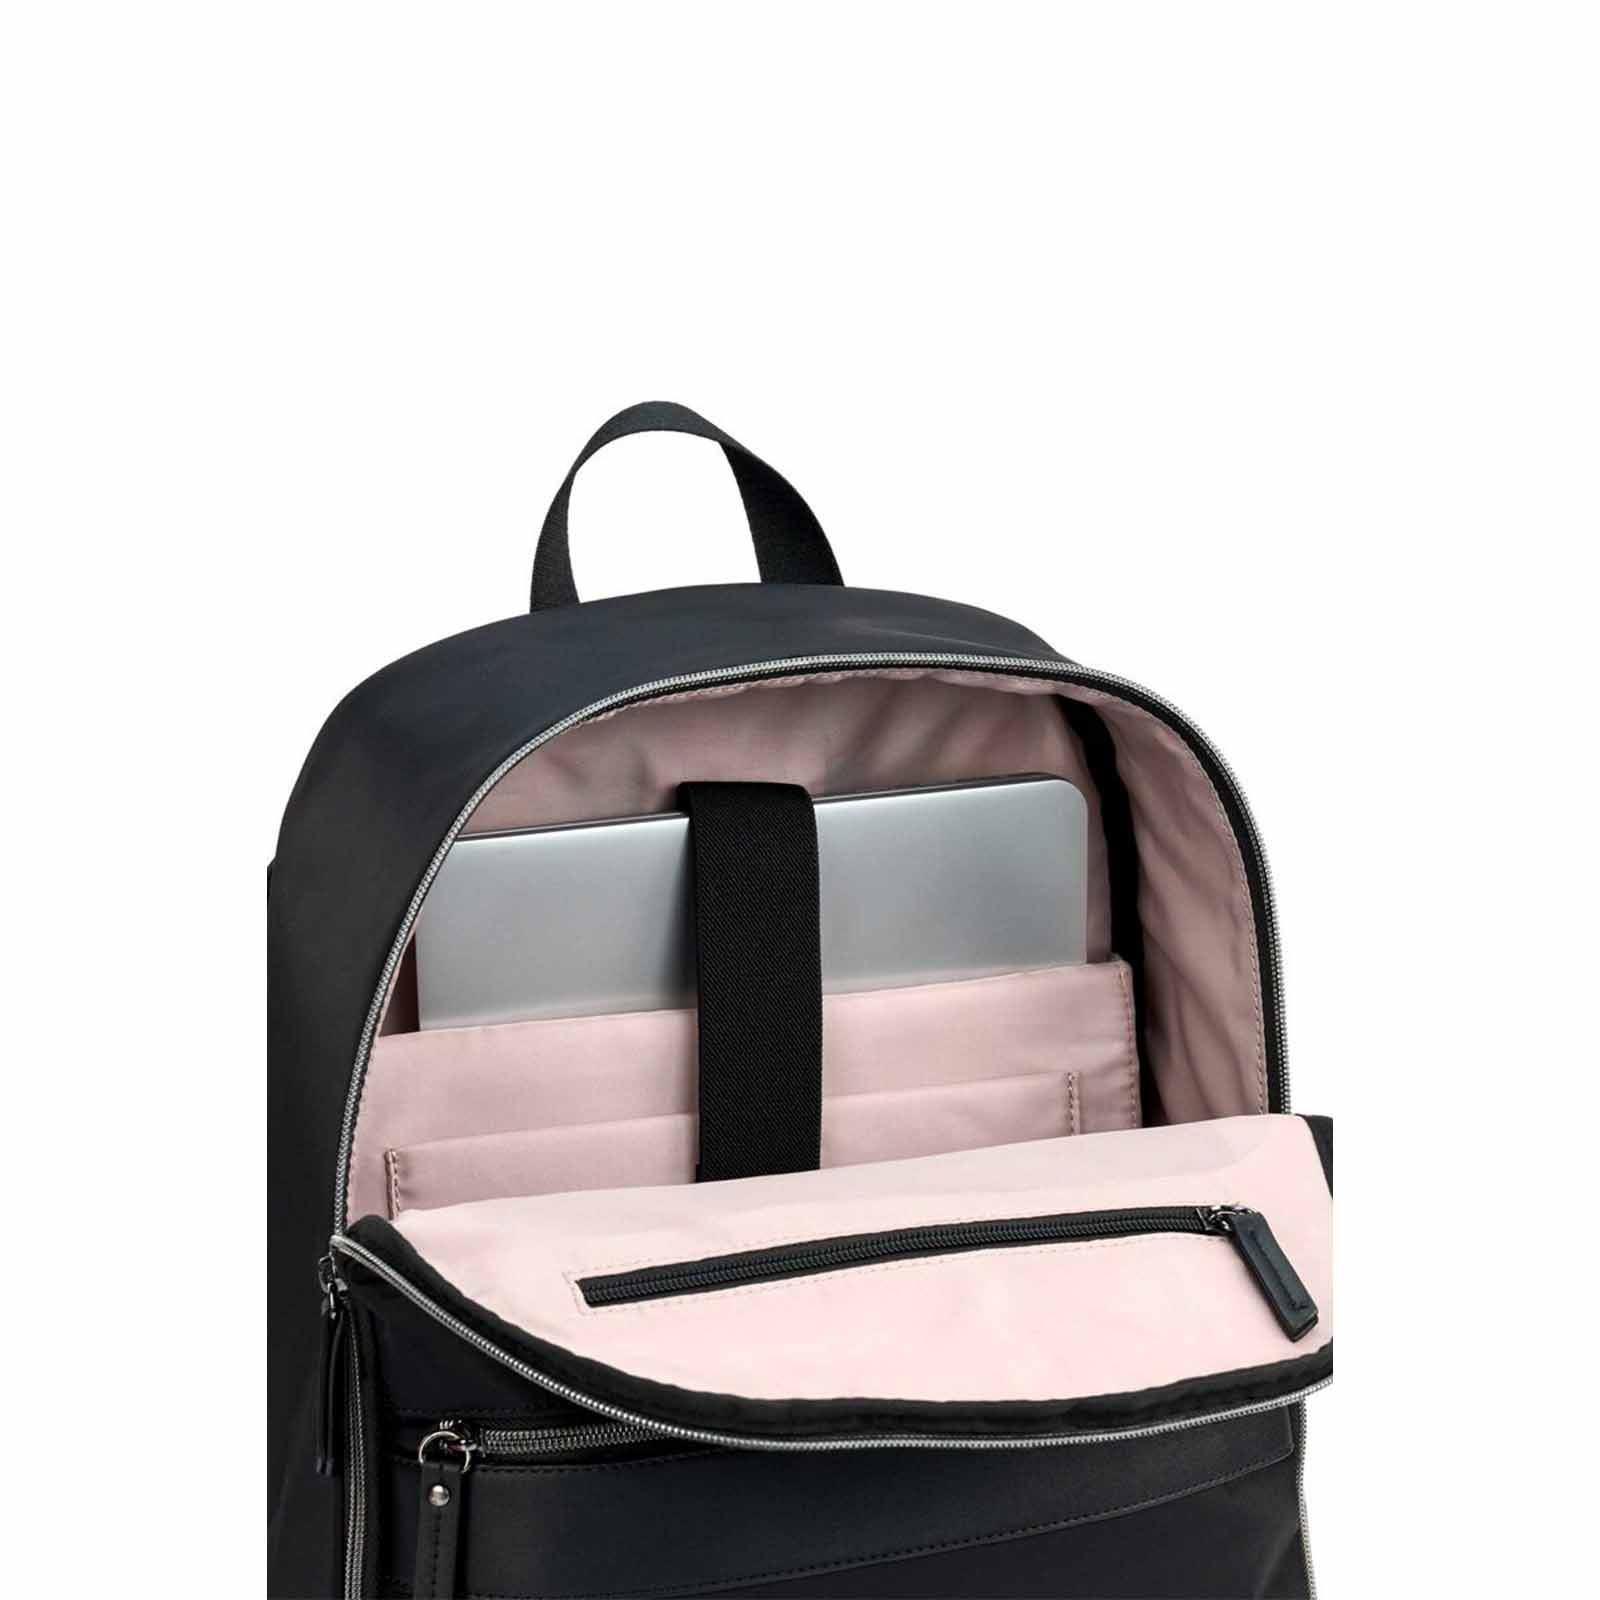 Samsonite-Mobile-Solutions-Backpack-Black-Laptop-Pouch